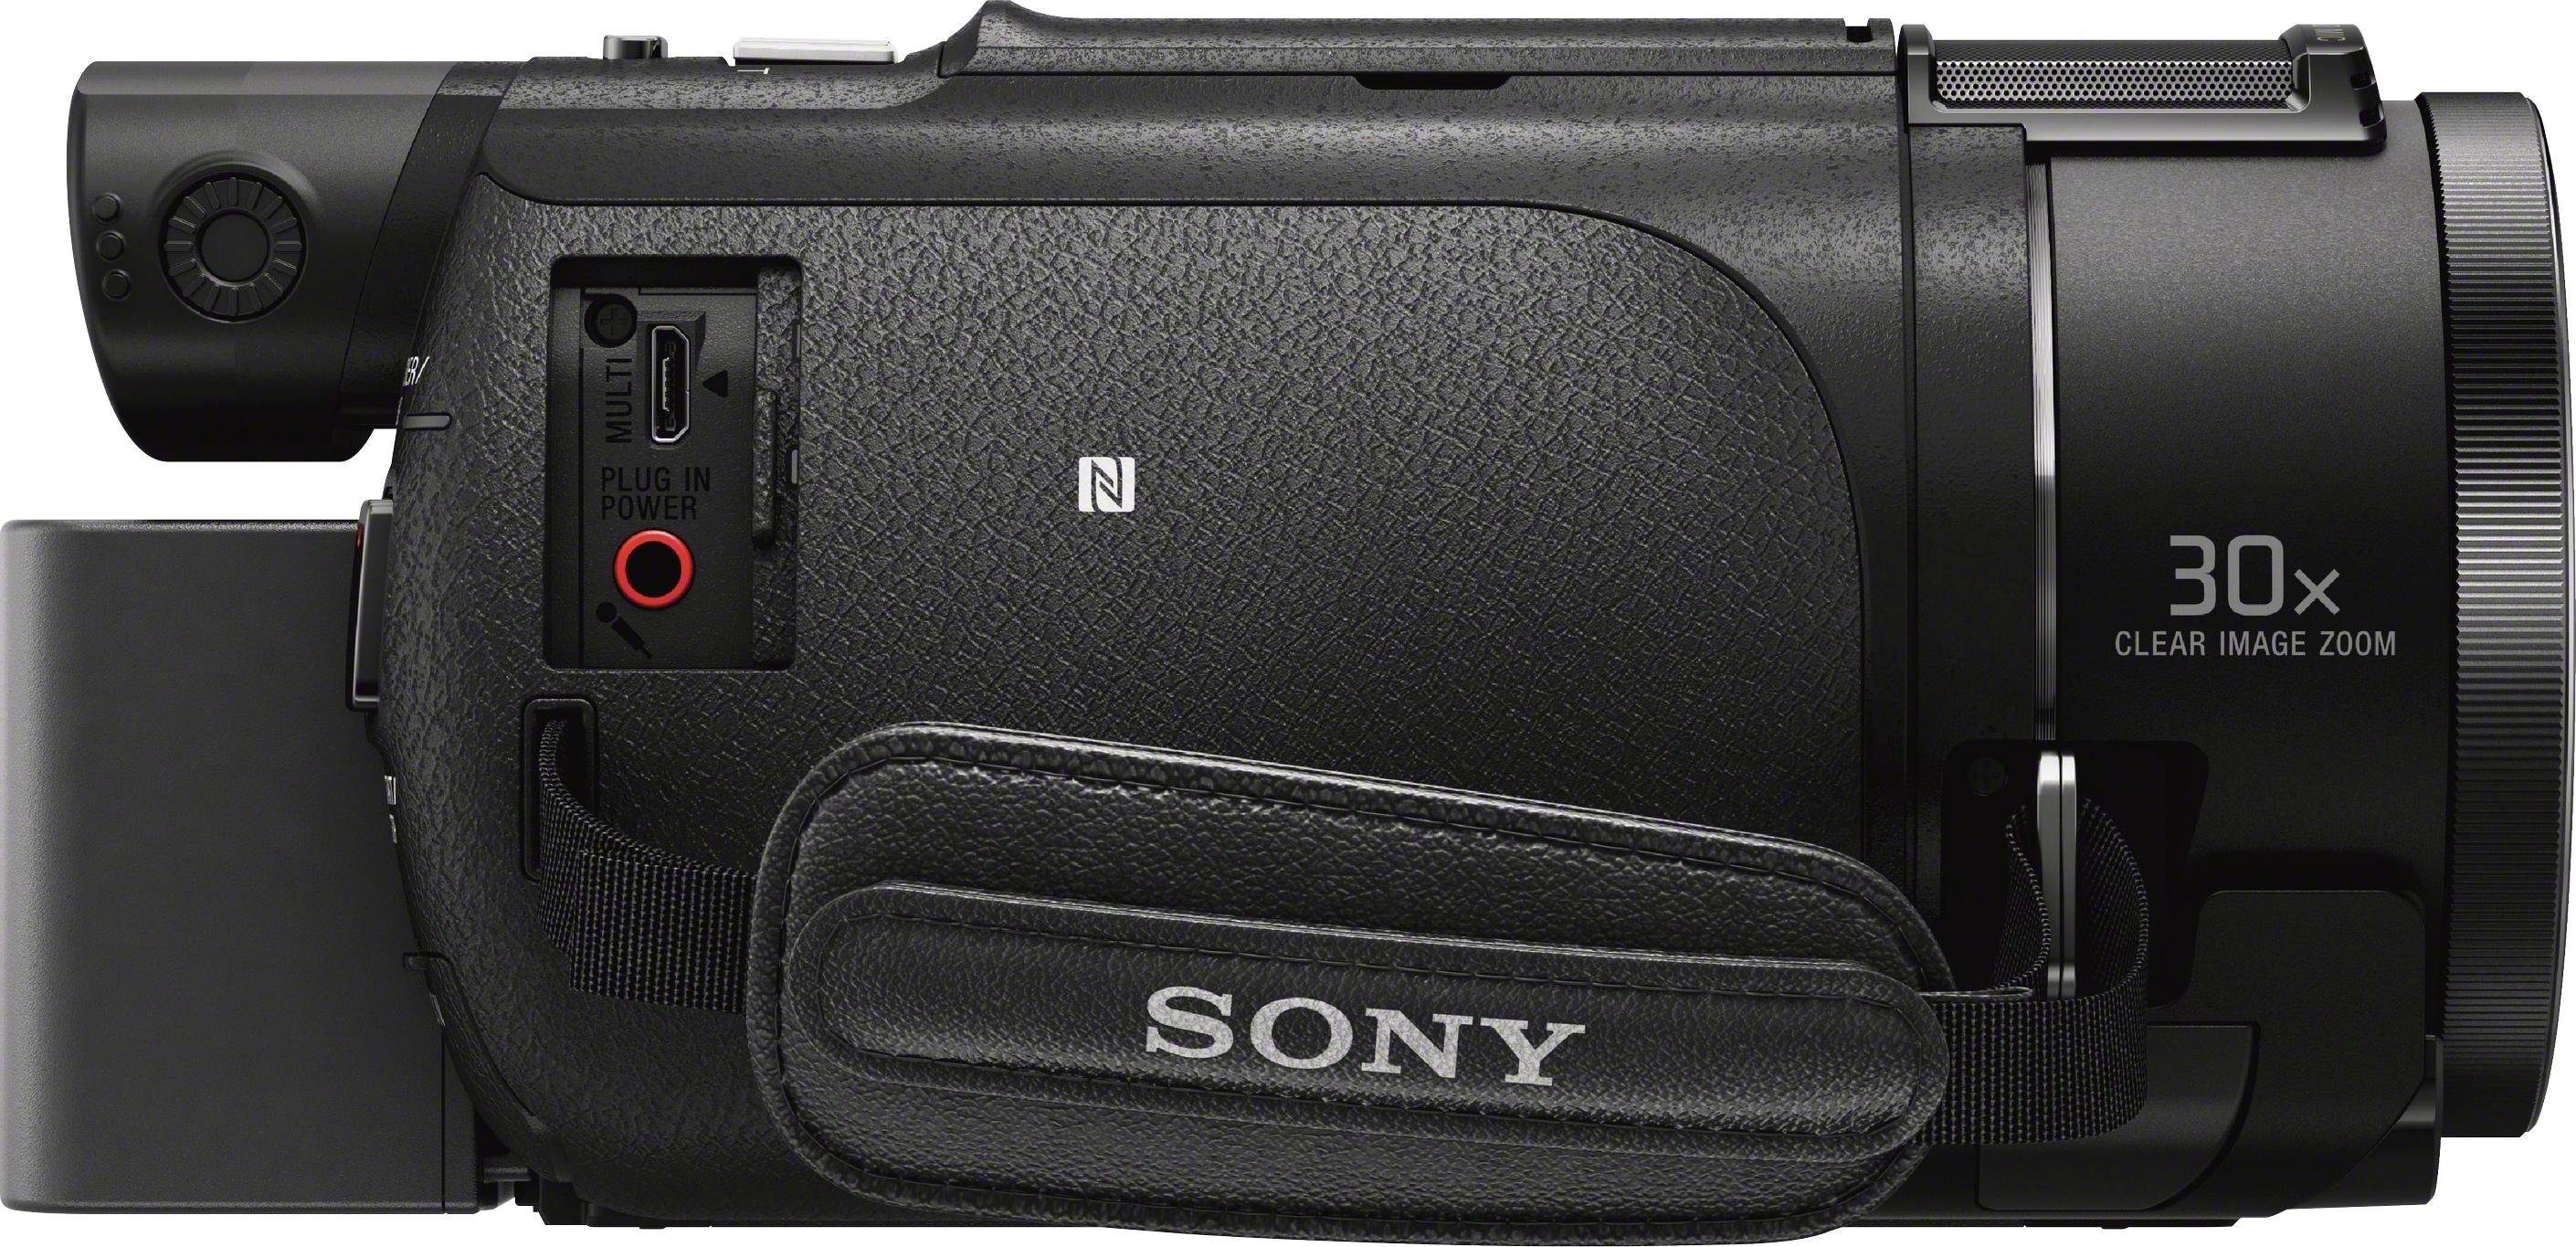 Sony FDRAX53.CEN HD, (Wi-Fi), Ultra Zoom) (4K opt. WLAN NFC, Camcorder 20x